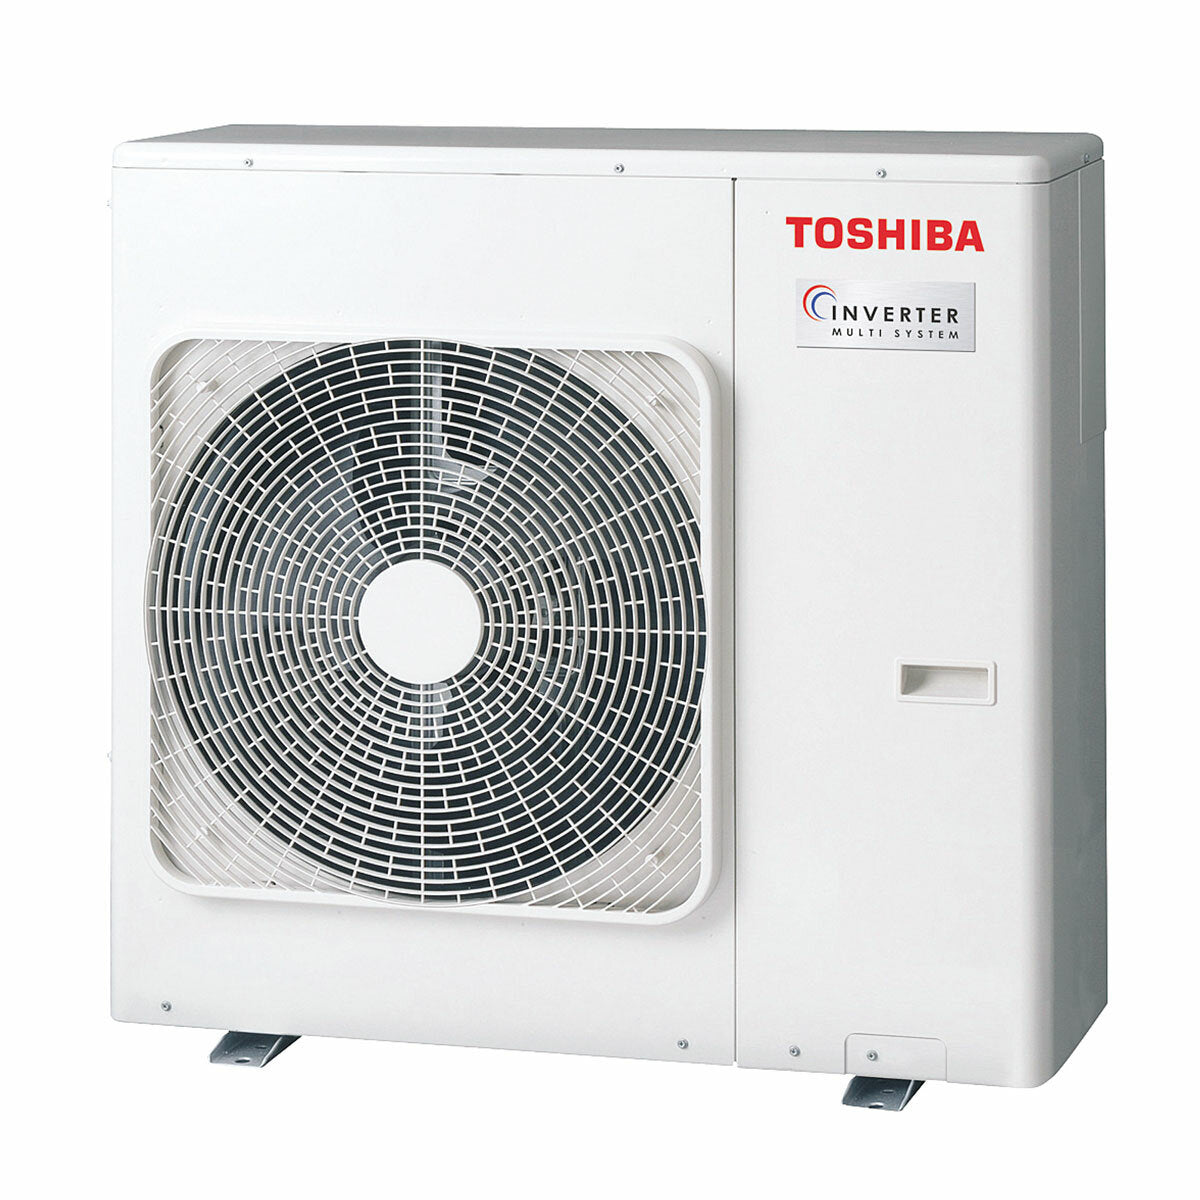 Toshiba New Seiya air conditioner split panels 12000+12000+12000+12000 BTU inverter A++ external unit 8 kW